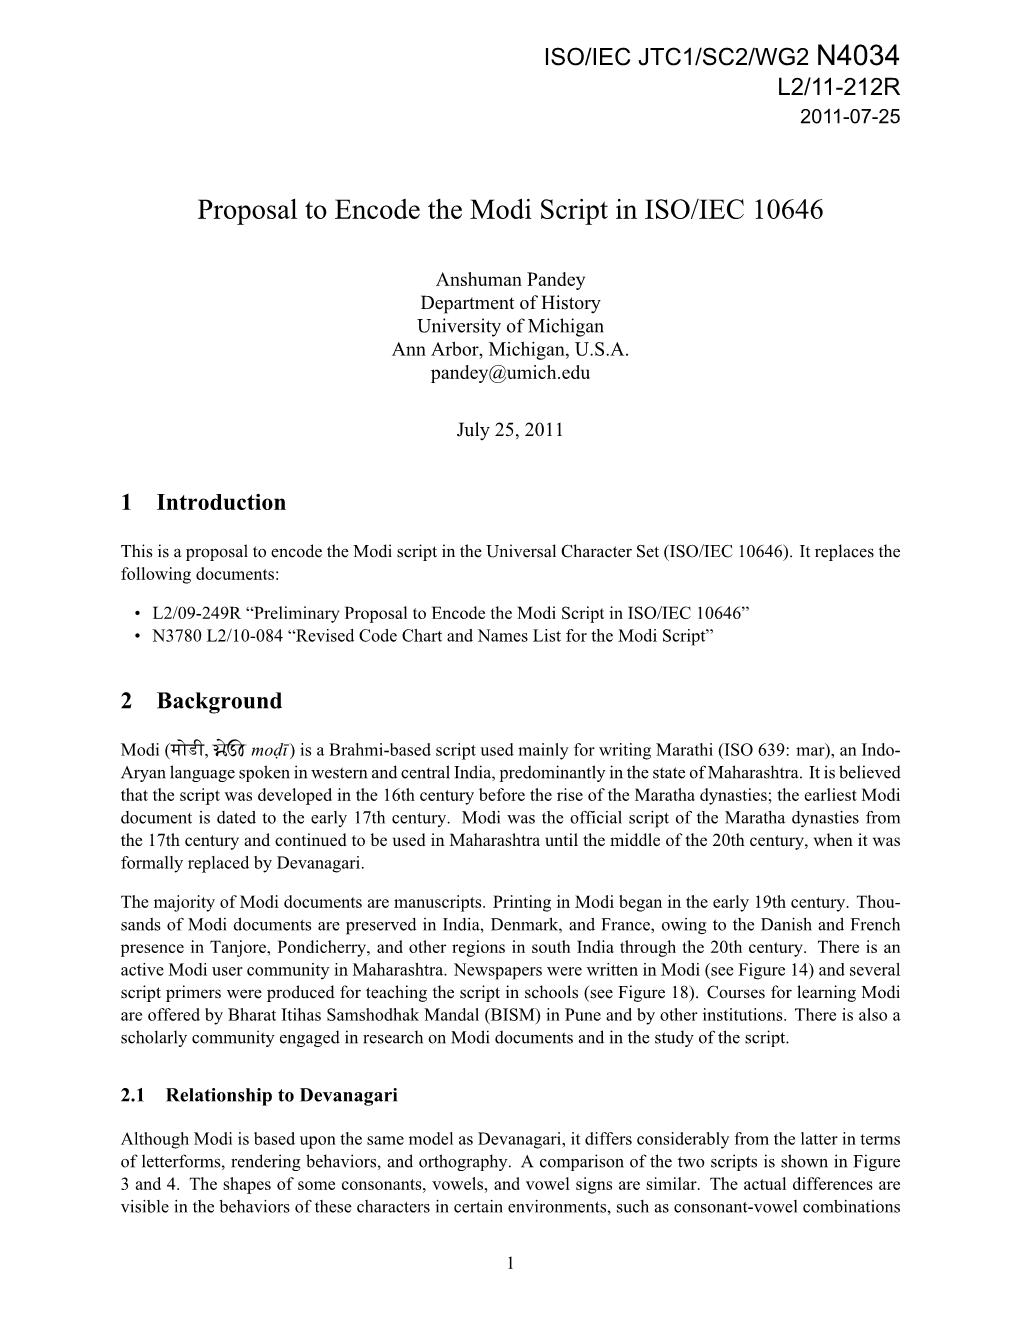 N4034 Proposal to Encode the Modi Script in ISO/IEC 10646